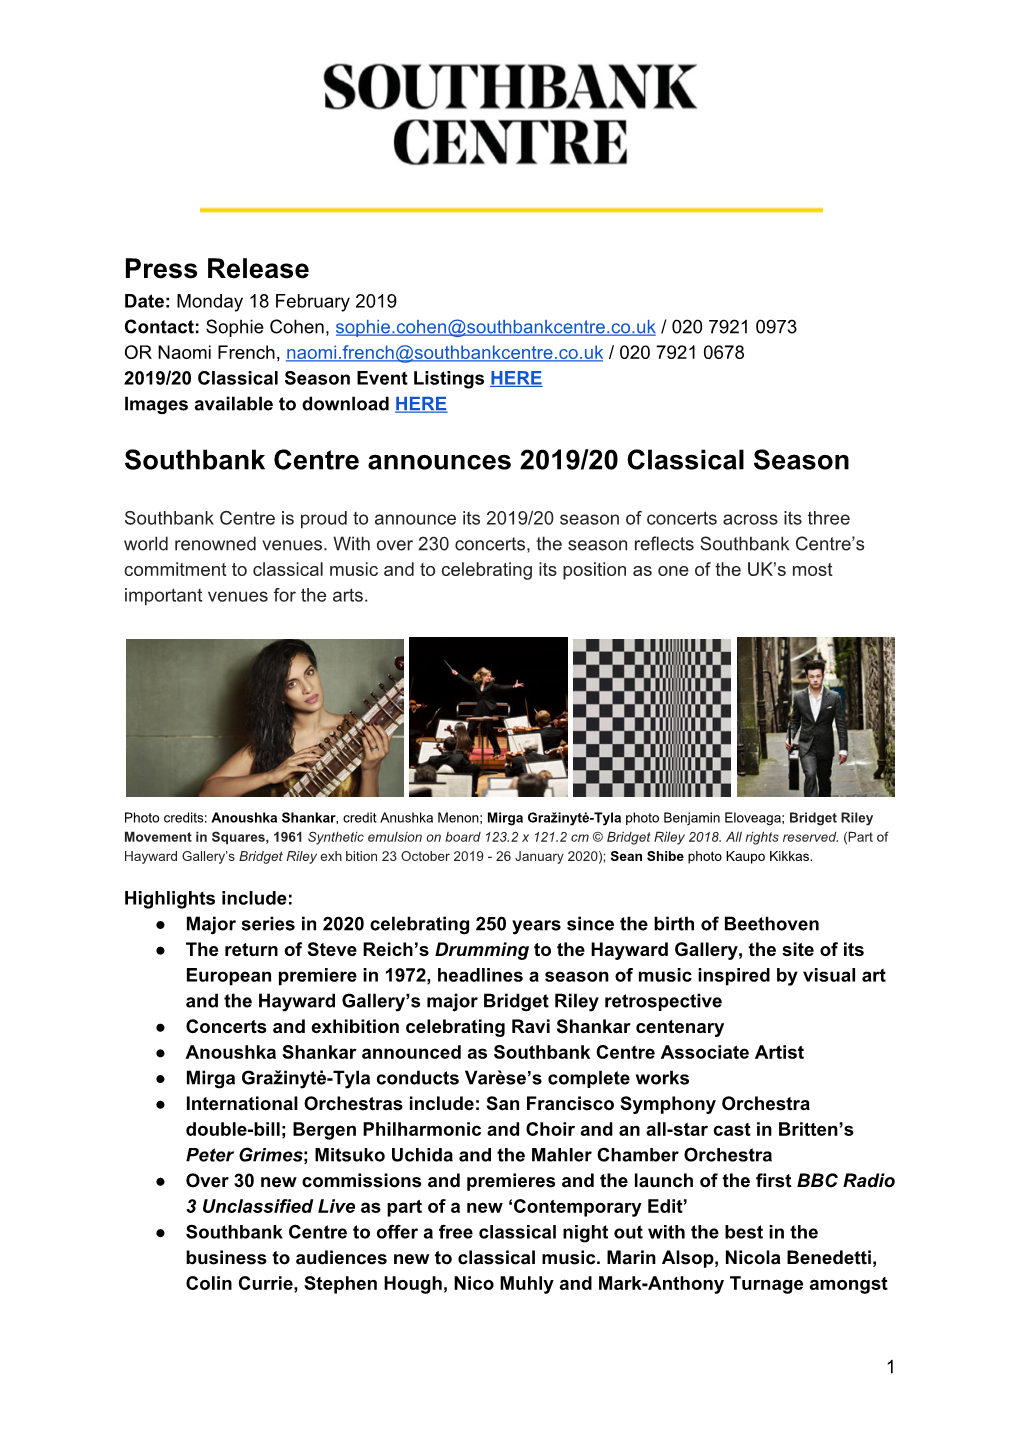 Press Release Southbank Centre Announces 2019/20 Classical Season